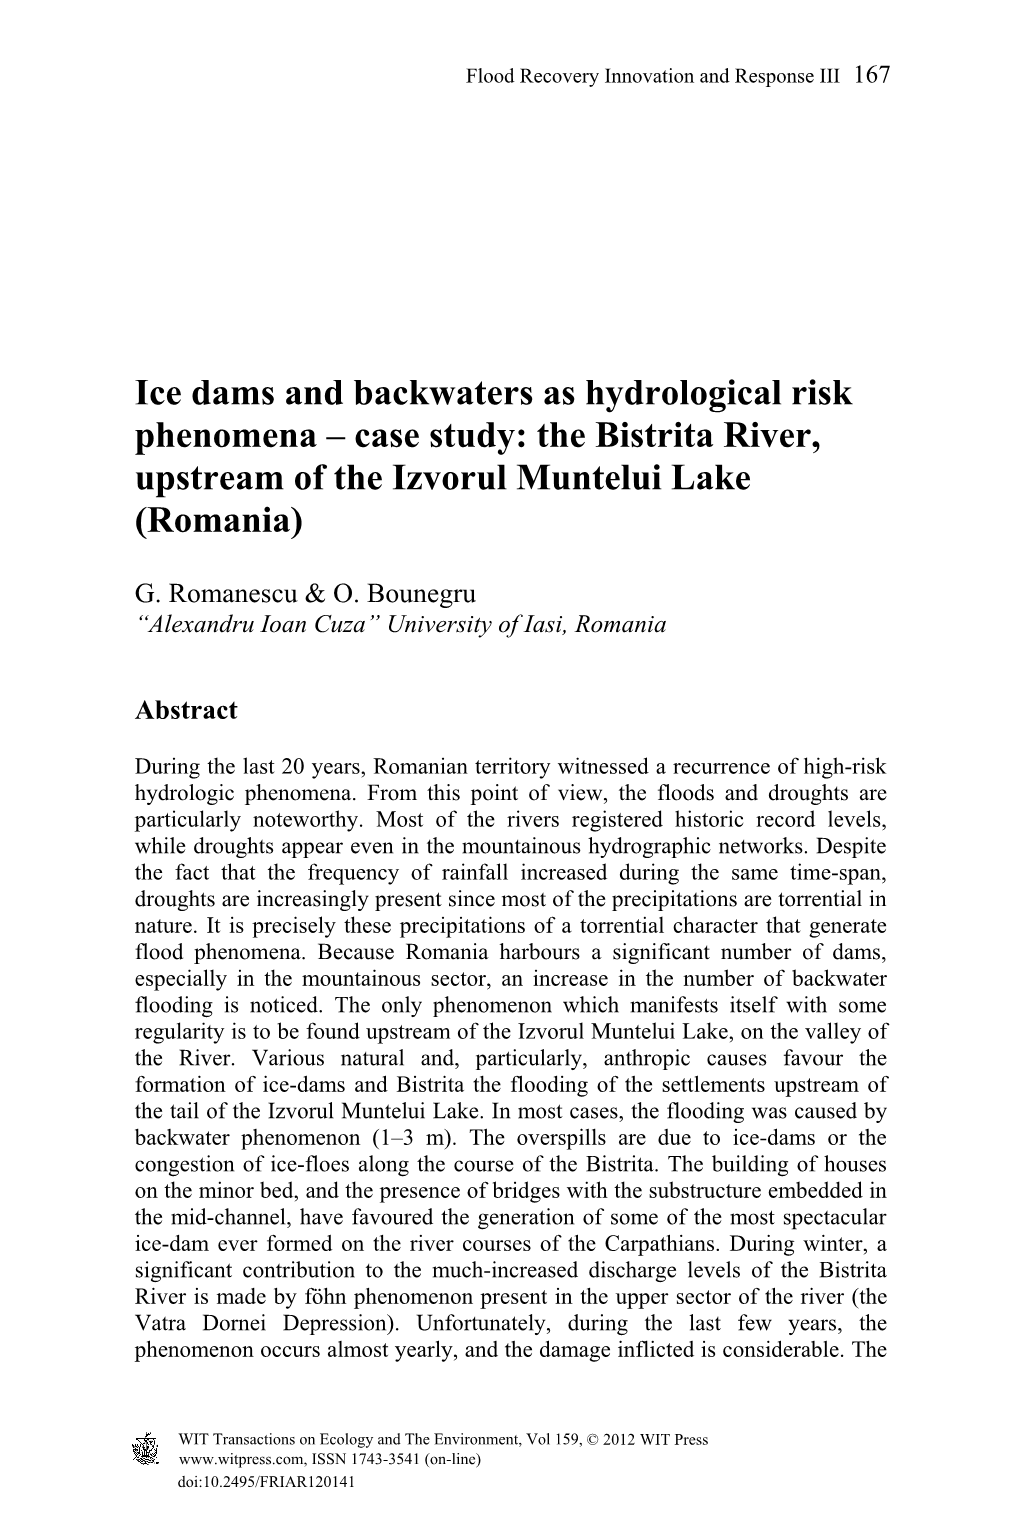 Ice Dams and Backwaters As Hydrological Risk Phenomena – Case Study: the Bistrita River, Upstream of the Izvorul Muntelui Lake (Romania)